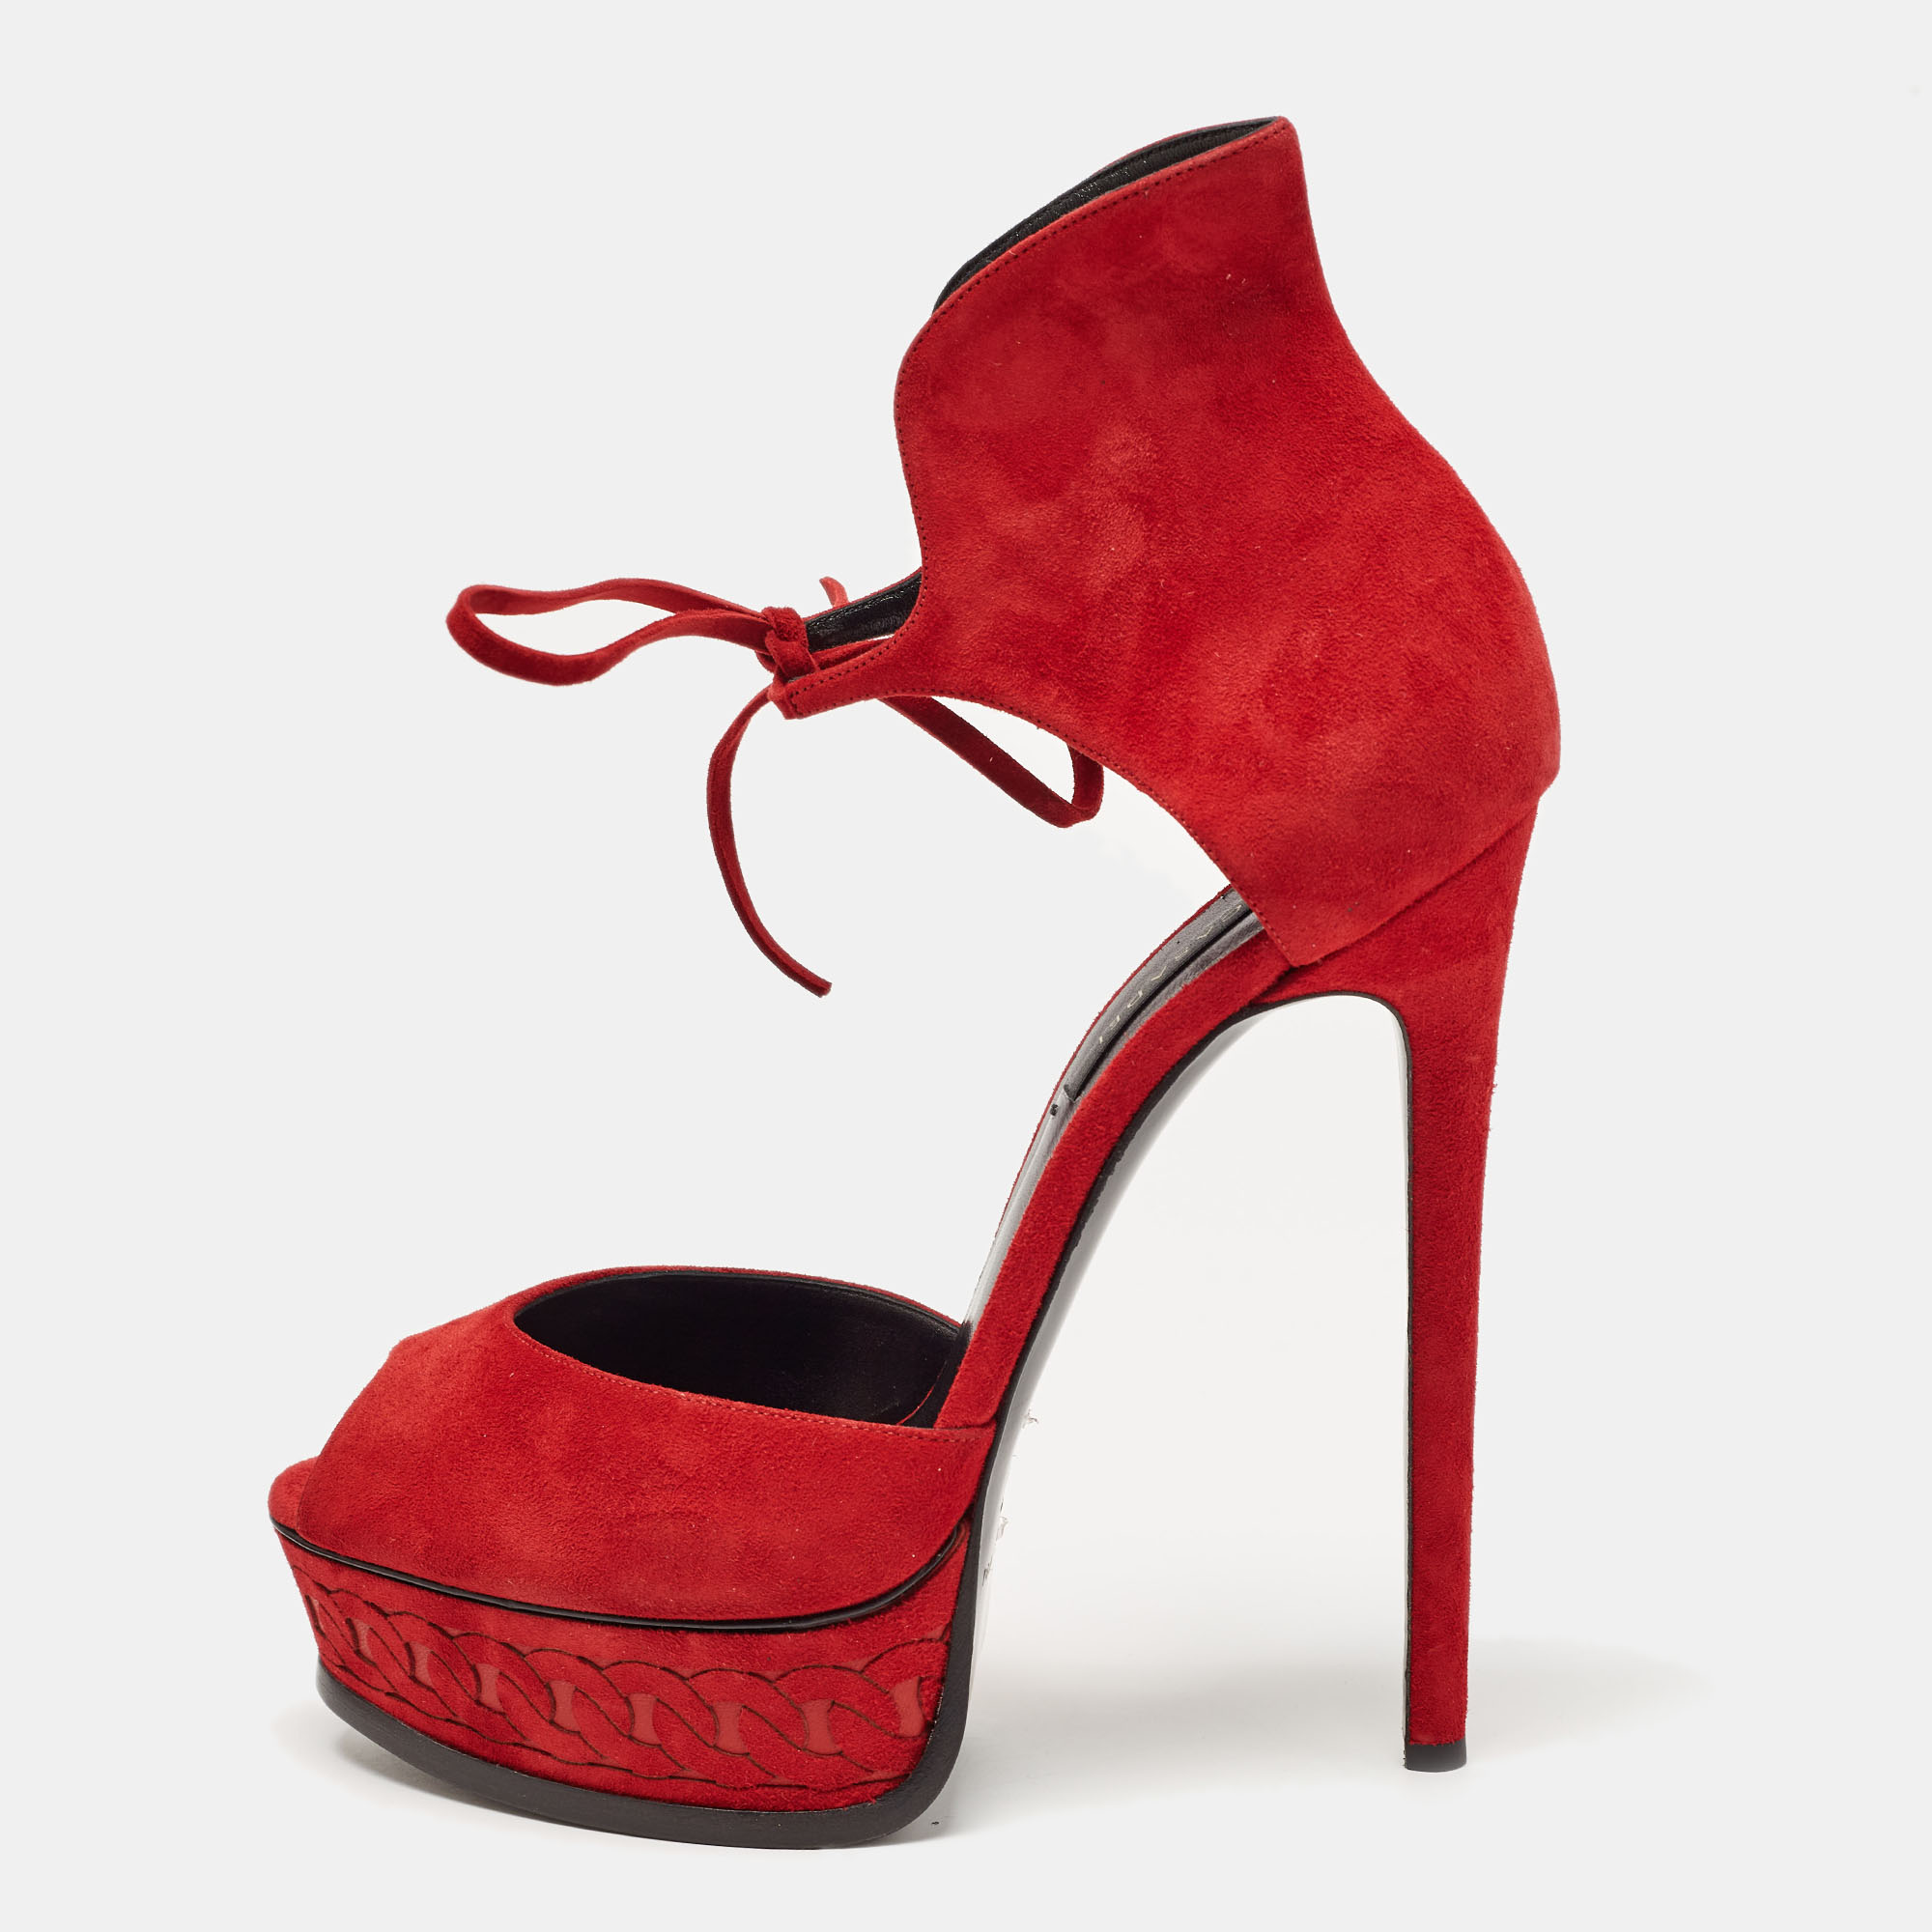 Casadei red suede ankle strap platform sandals size 40